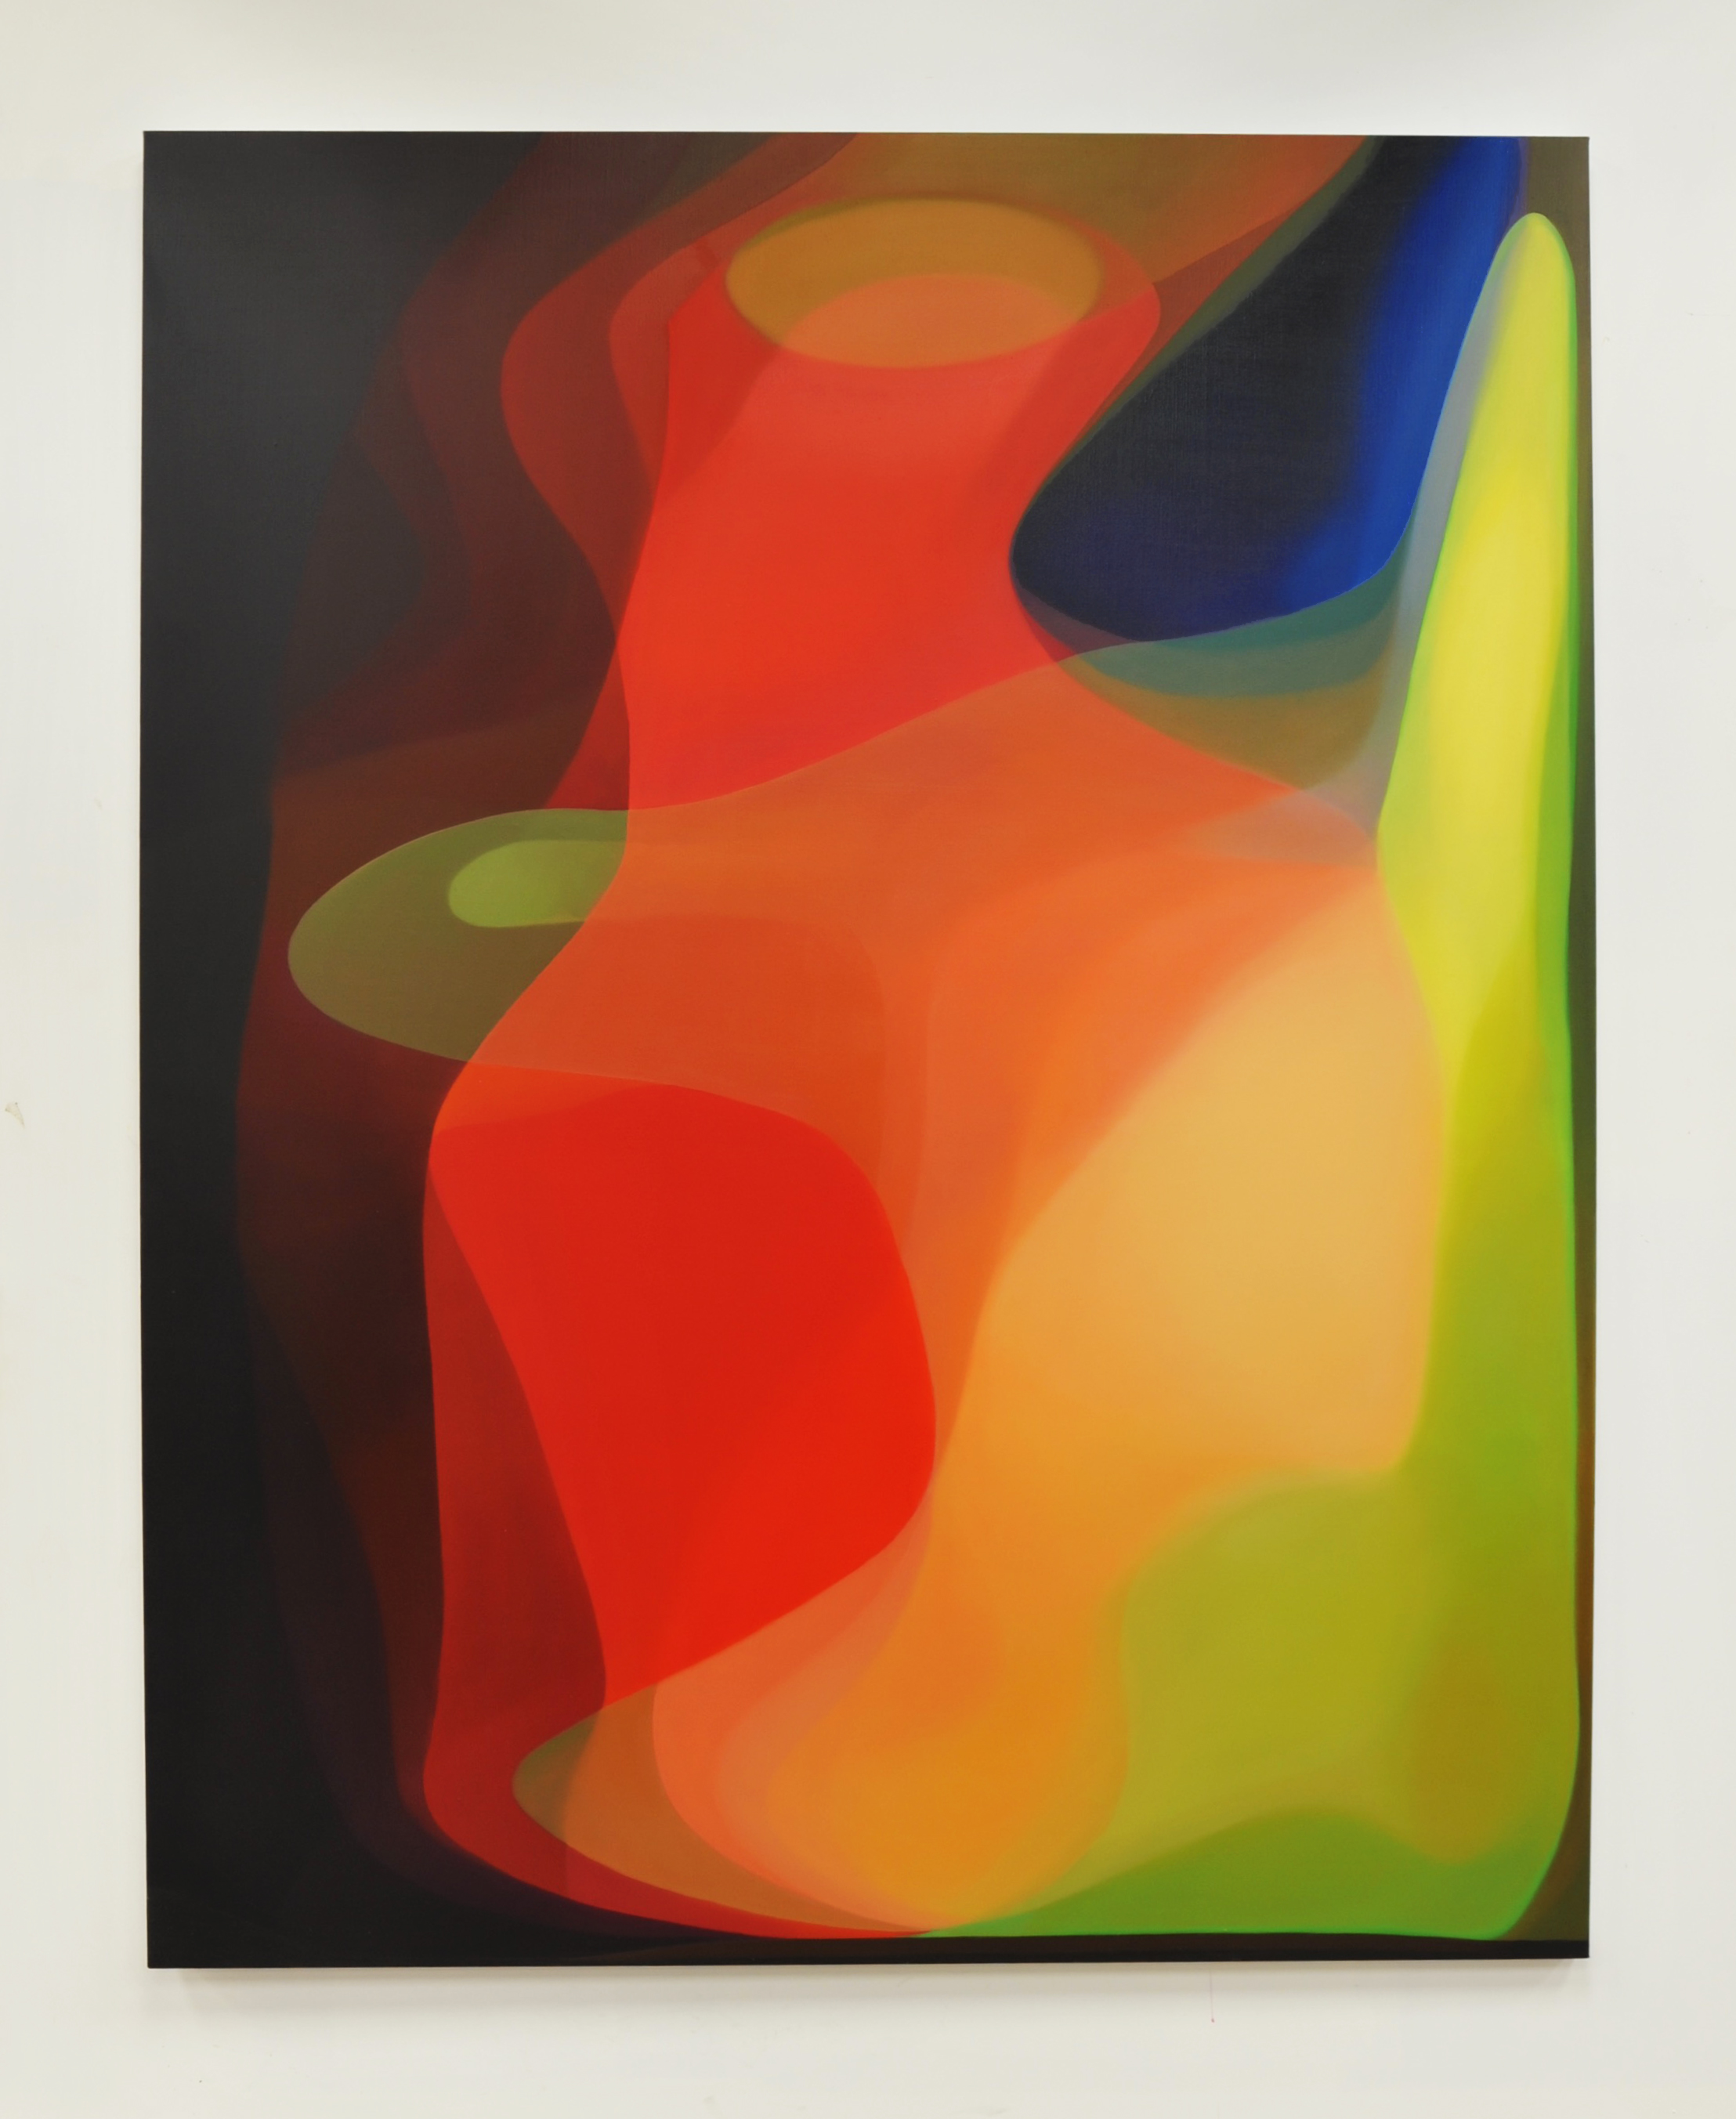   JOHN YOUNG   Spectrum III  2016 Oil on canvas 190 x 150 cm 